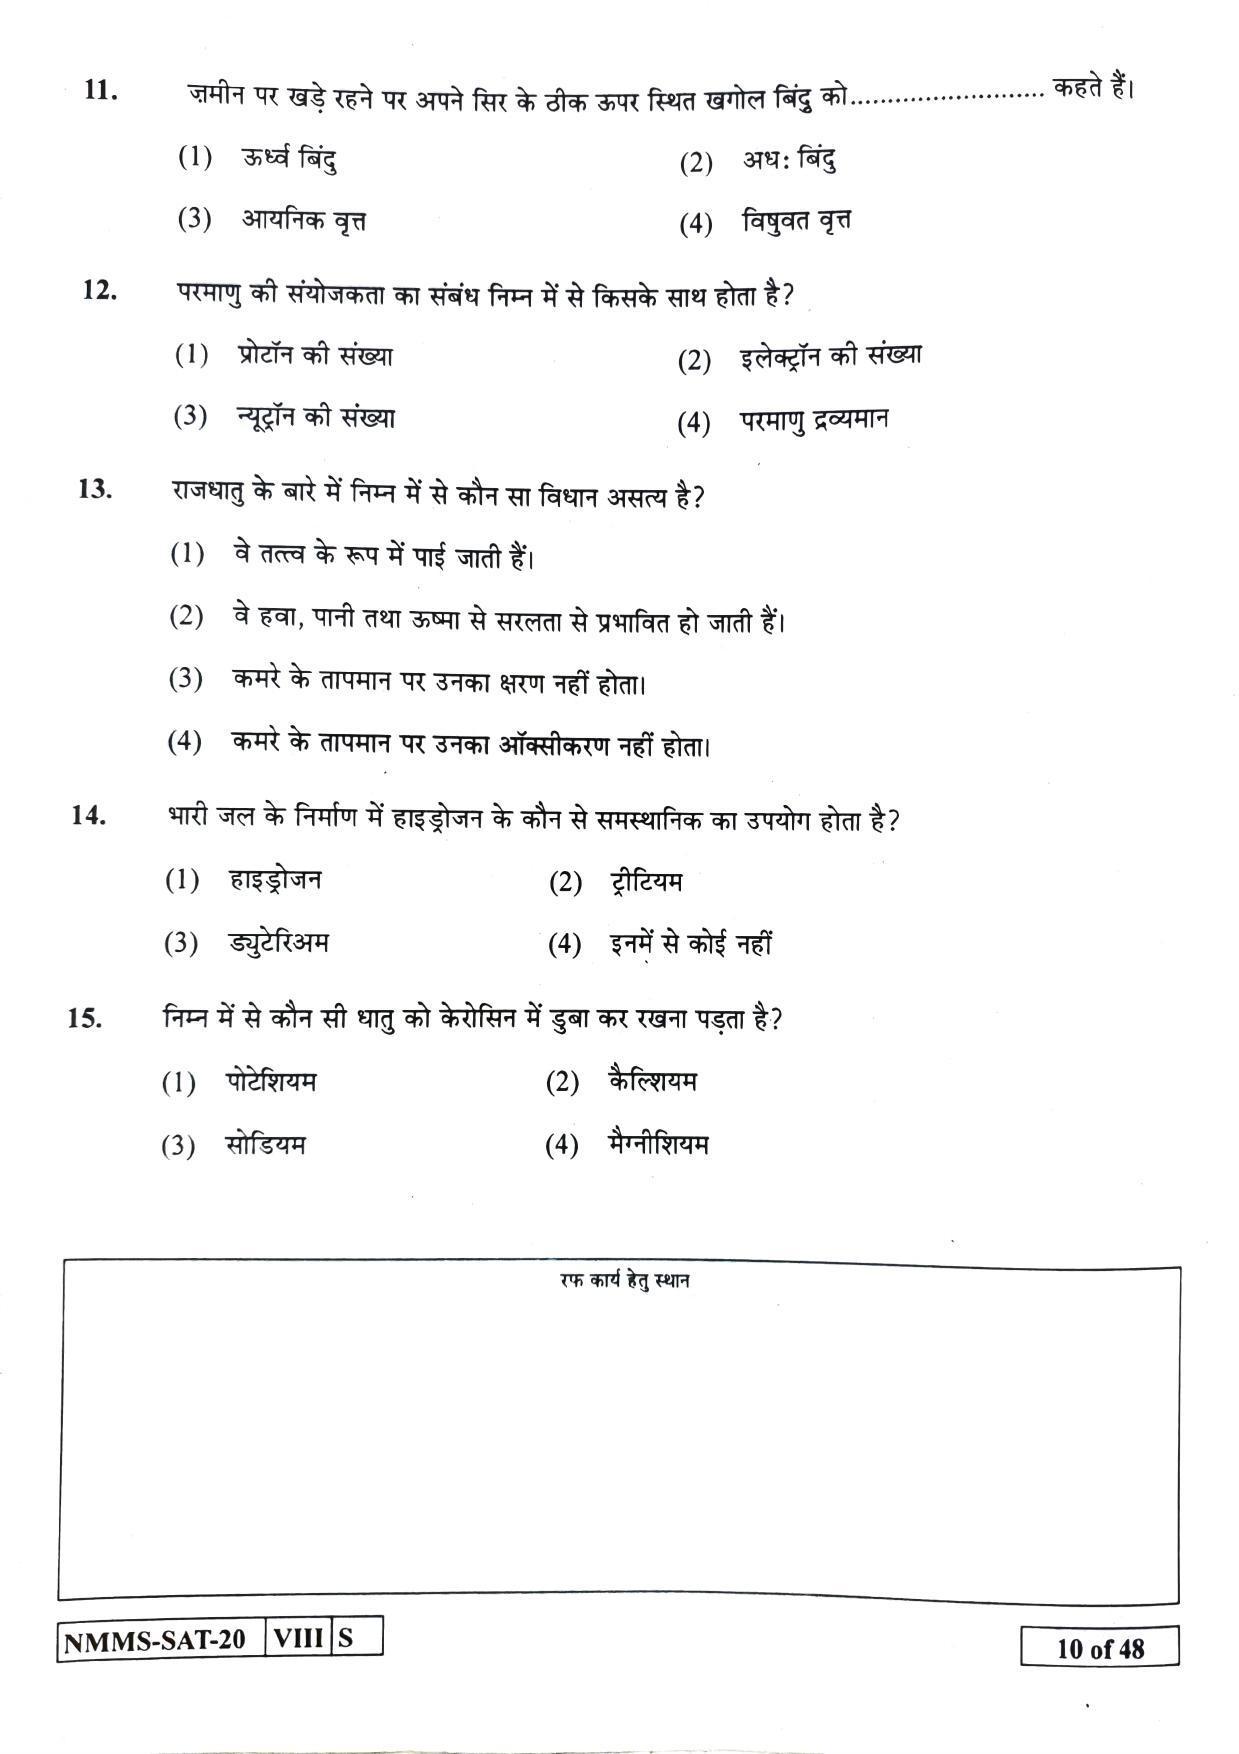 SAT HINDI 2020-21 Class 8 Maharashtra NMMS Question Papers - Page 10